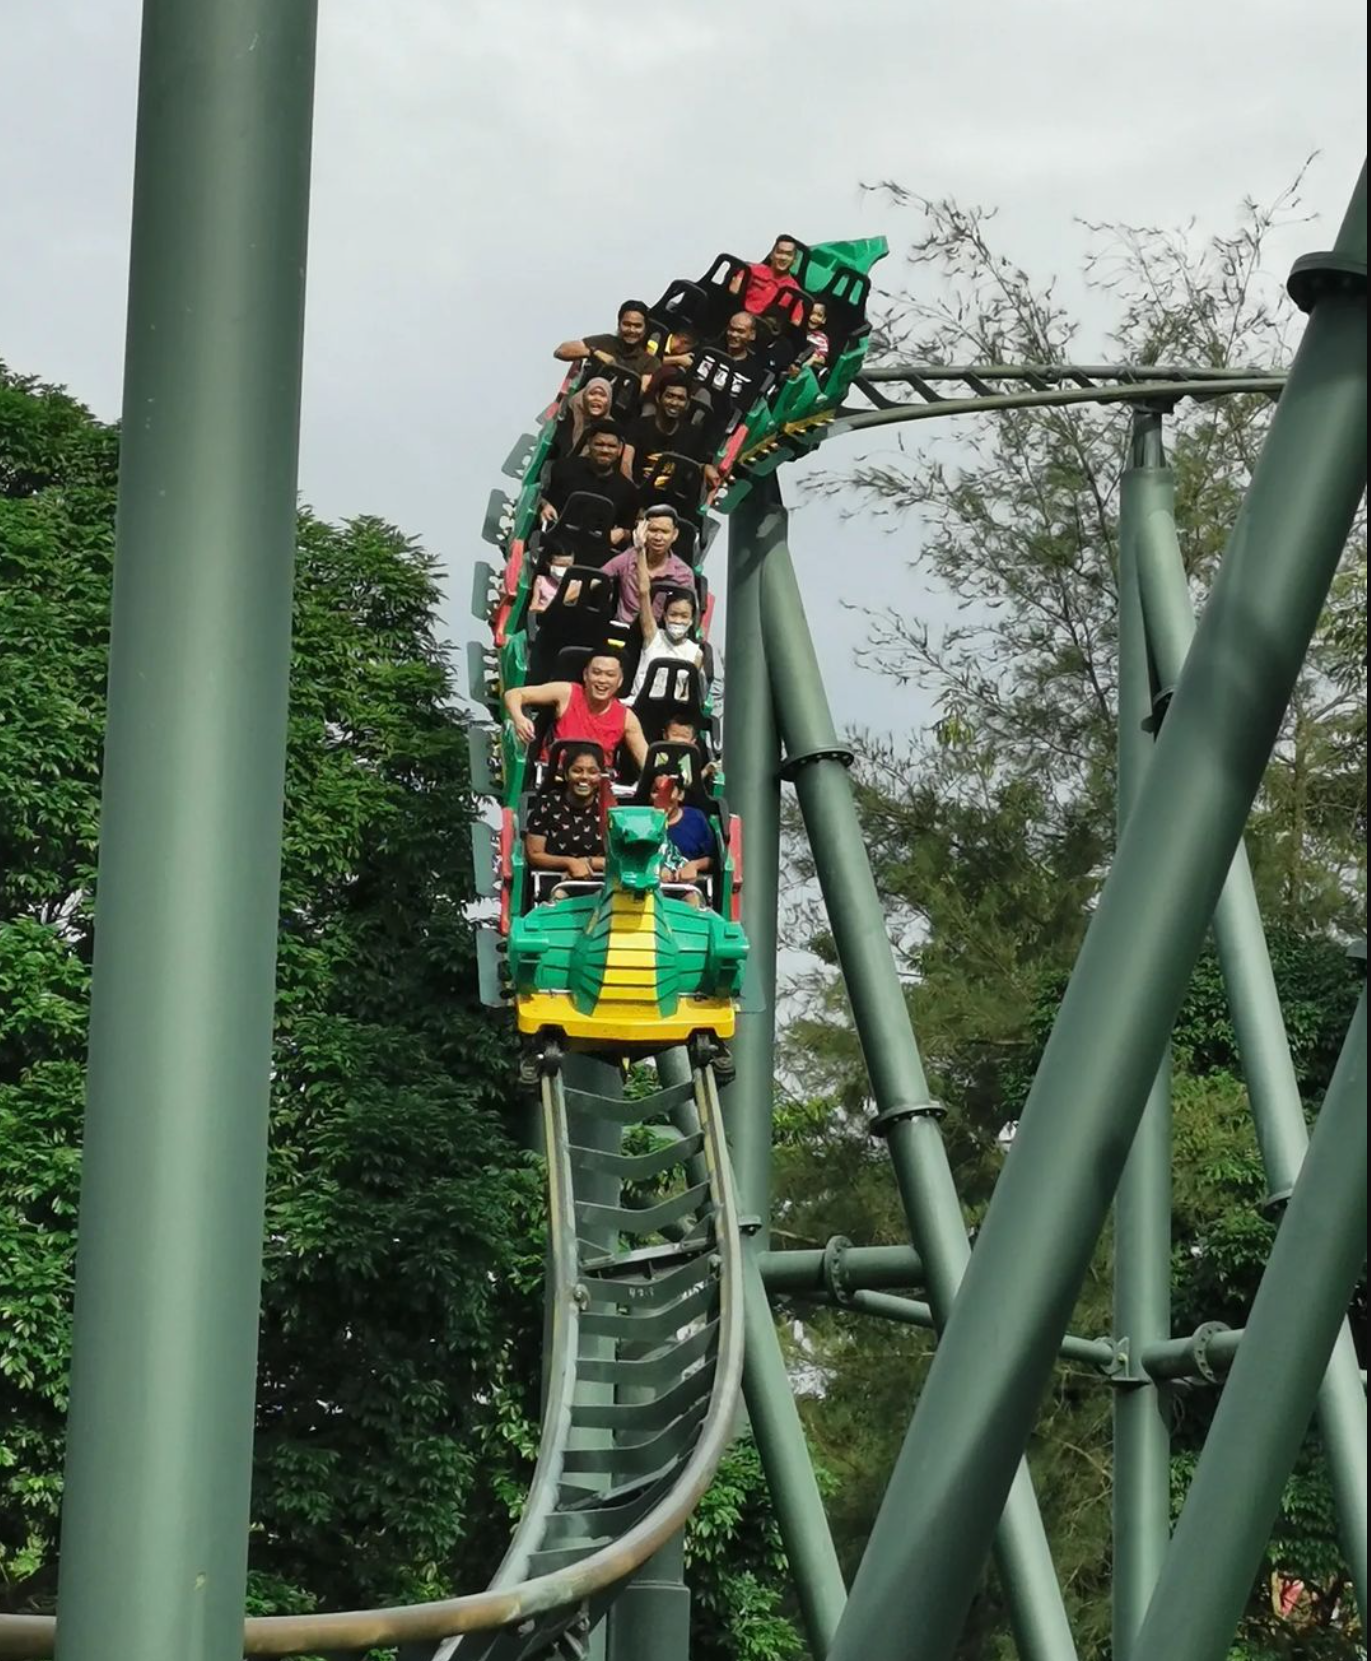 theme parks in malaysia - Legoland Malaysia the dragon roller coaster